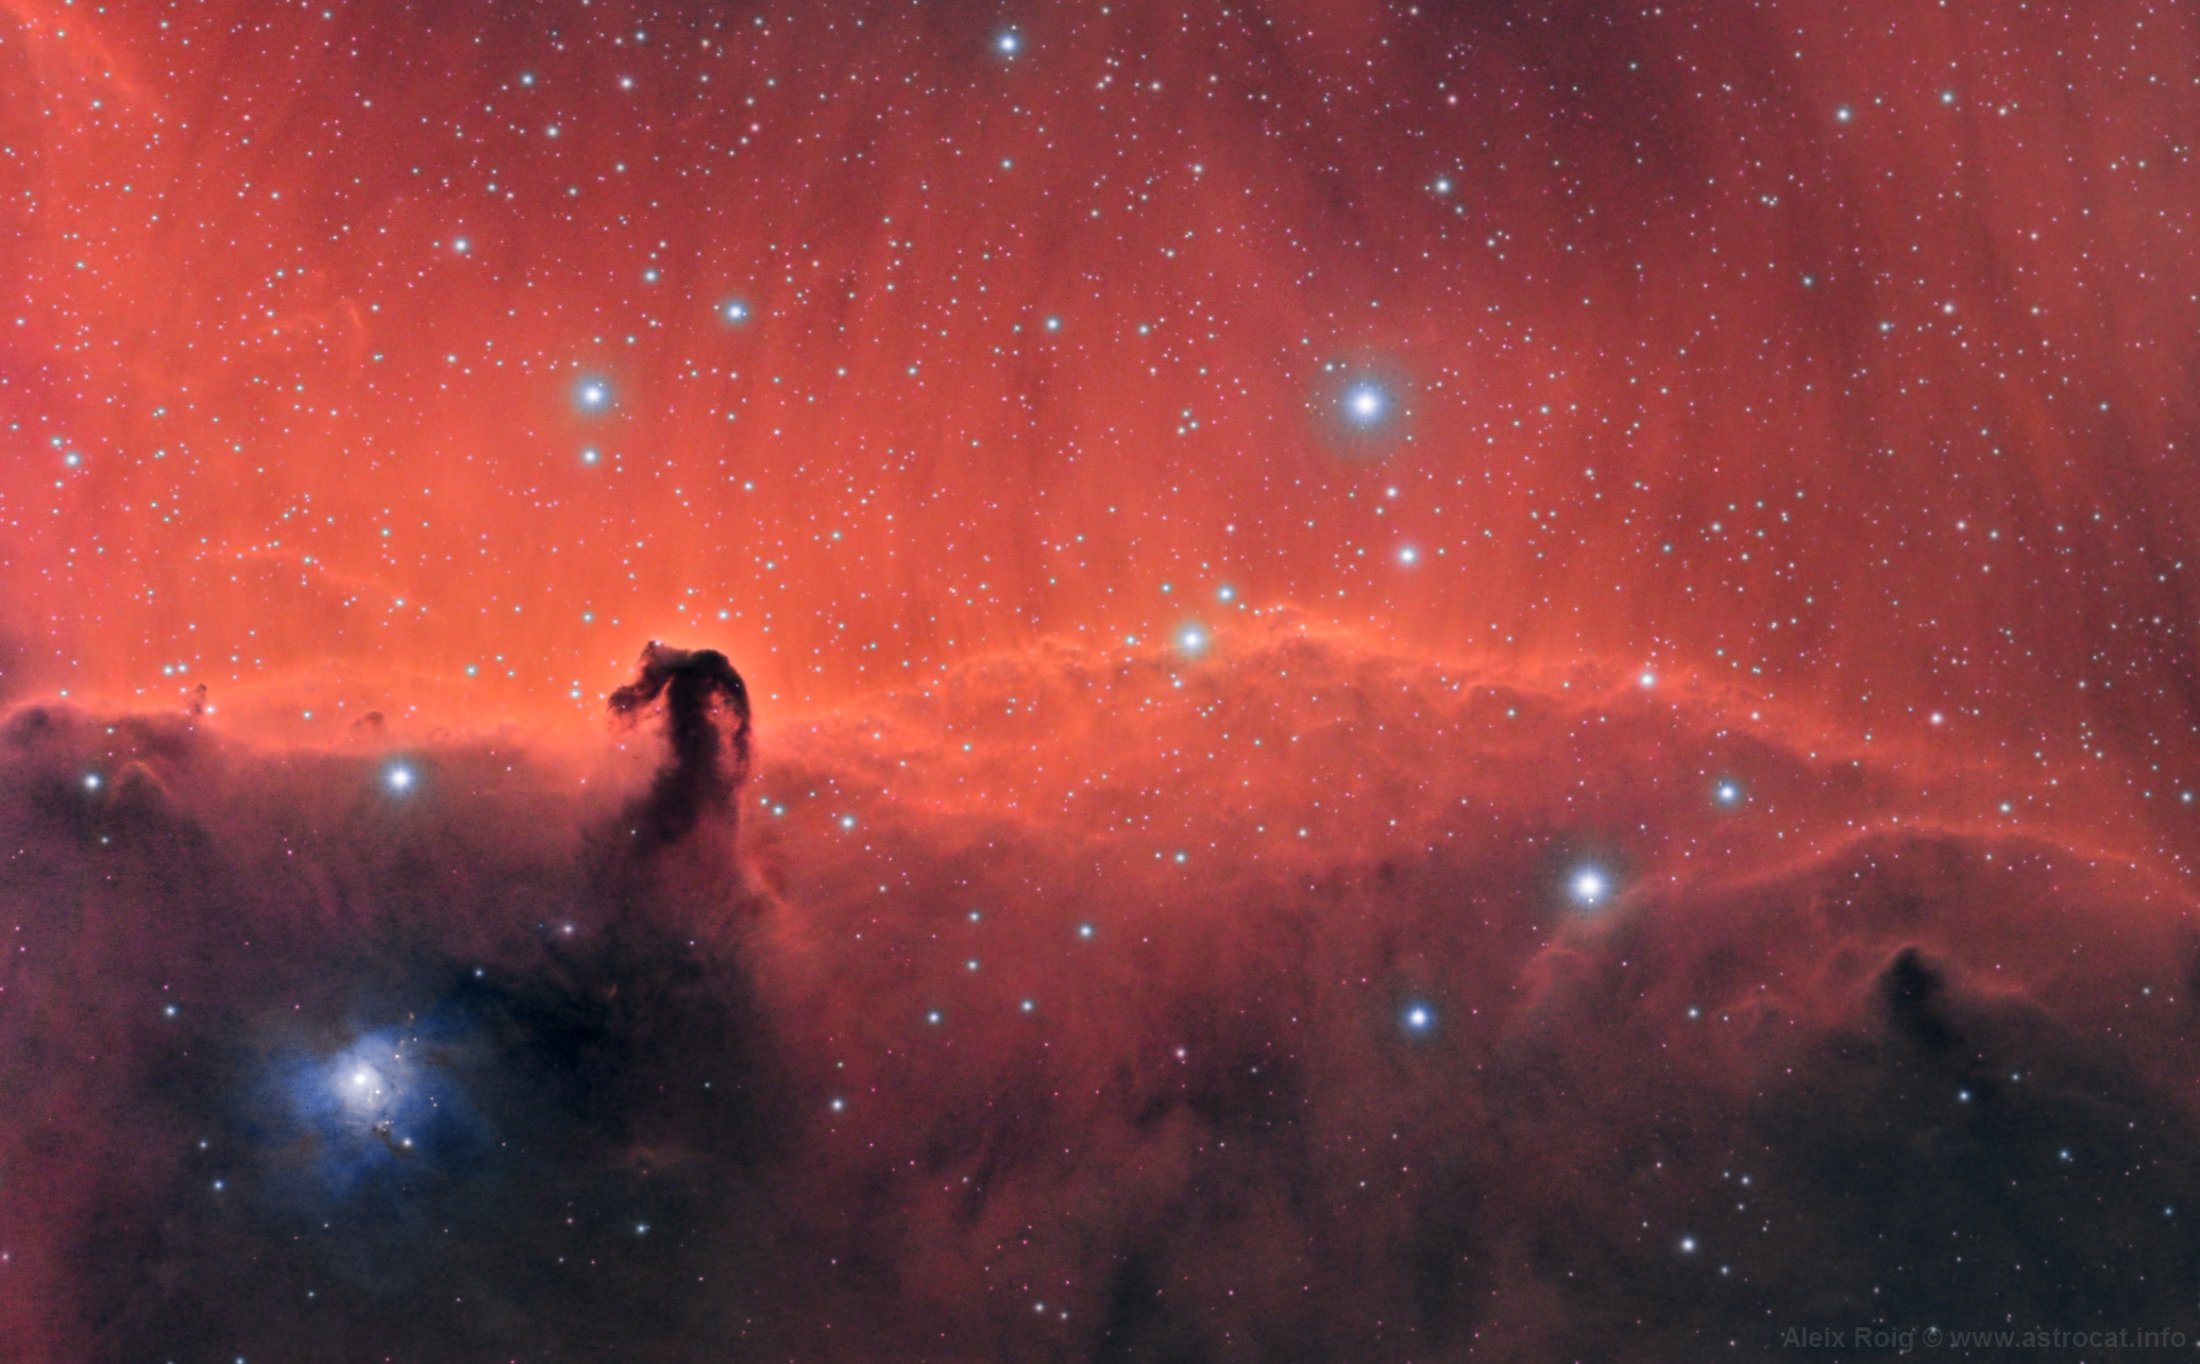 Horsehead Nebula - Aleix Roig